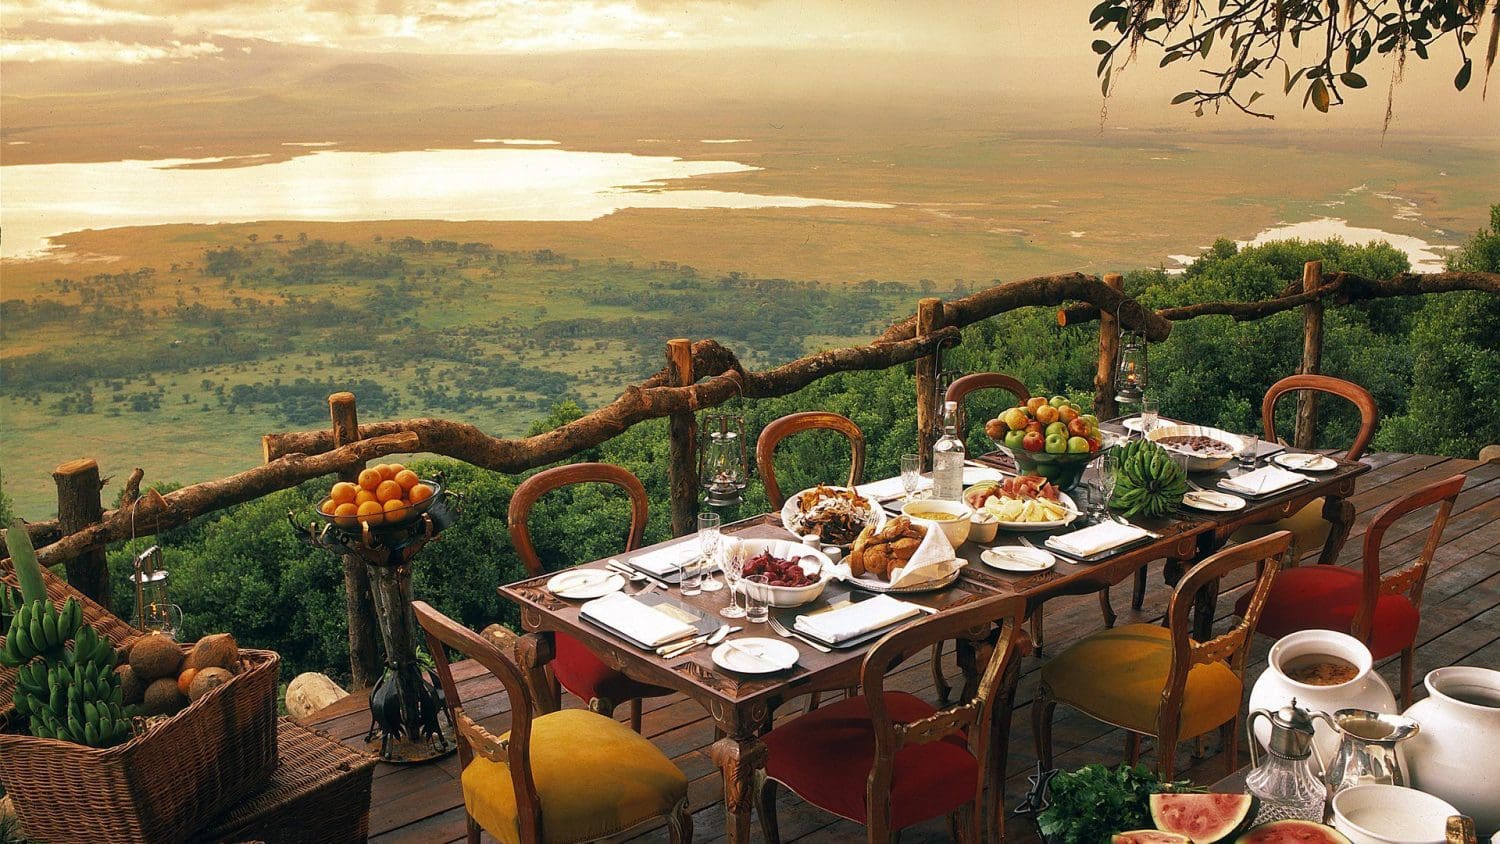 &BEYOND NGORONGORO CRATER LODGE, TANZANIA -Luxurious Safari Camps In Africa